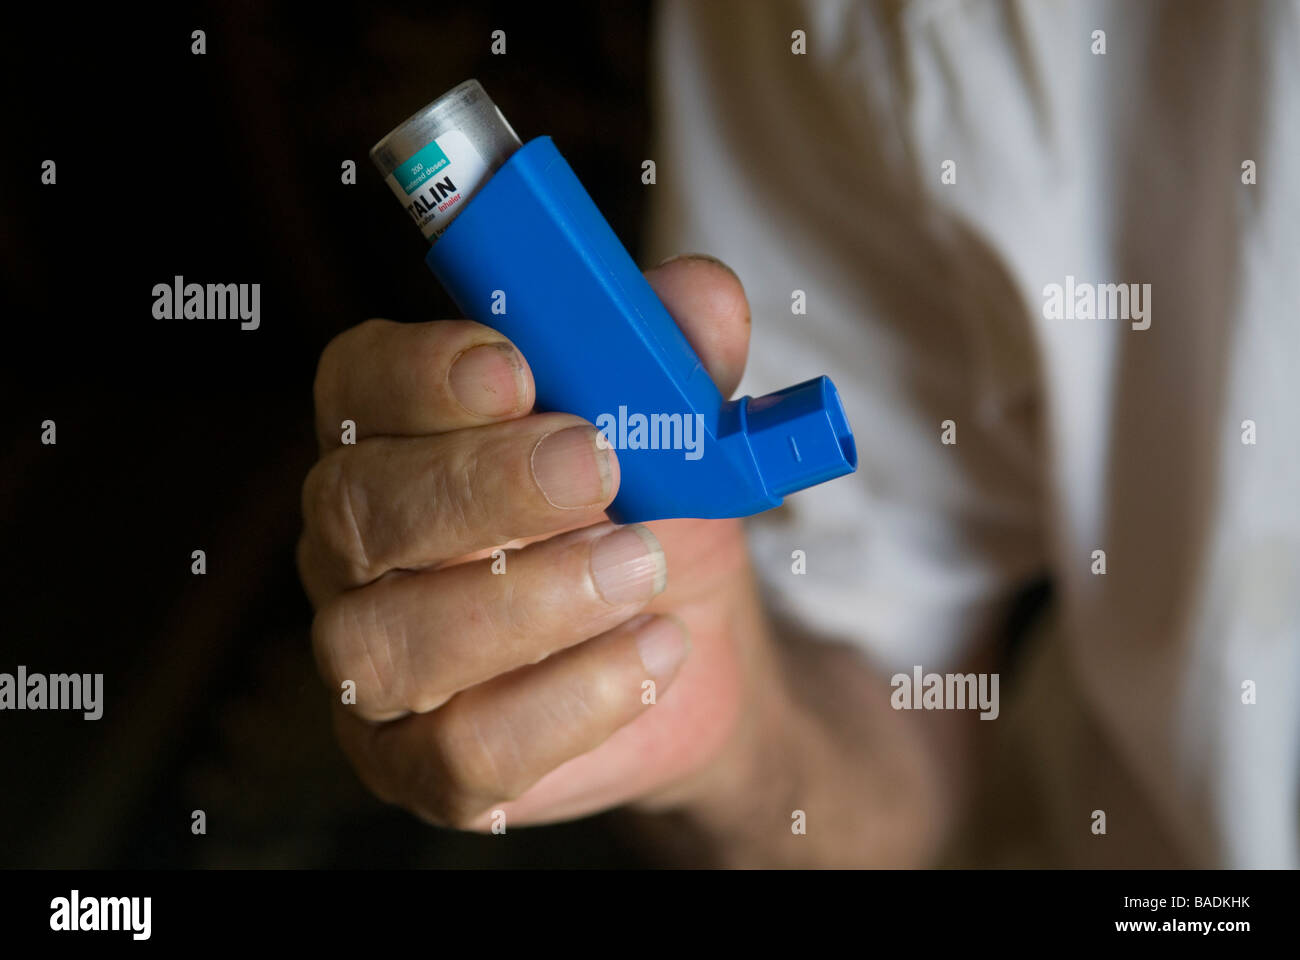 Old man holding an inhaler Stock Photo